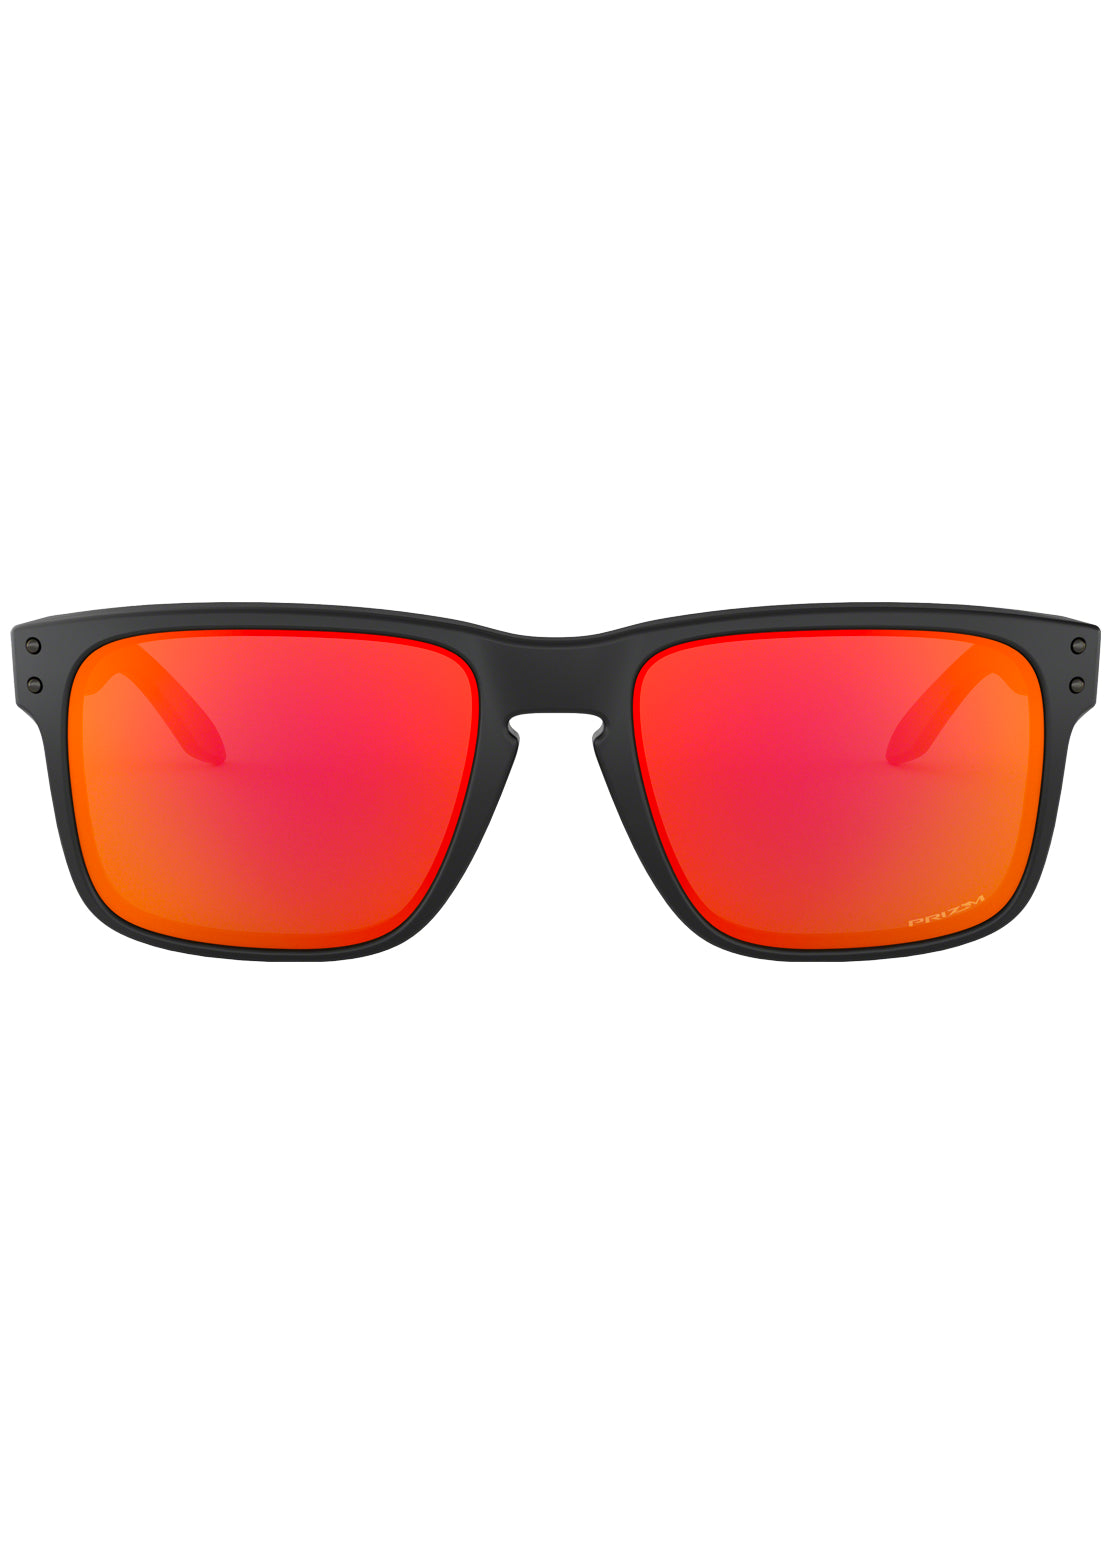 Oakley Men’s Holbrook Sunglasses Matte Black/Prizm Ruby